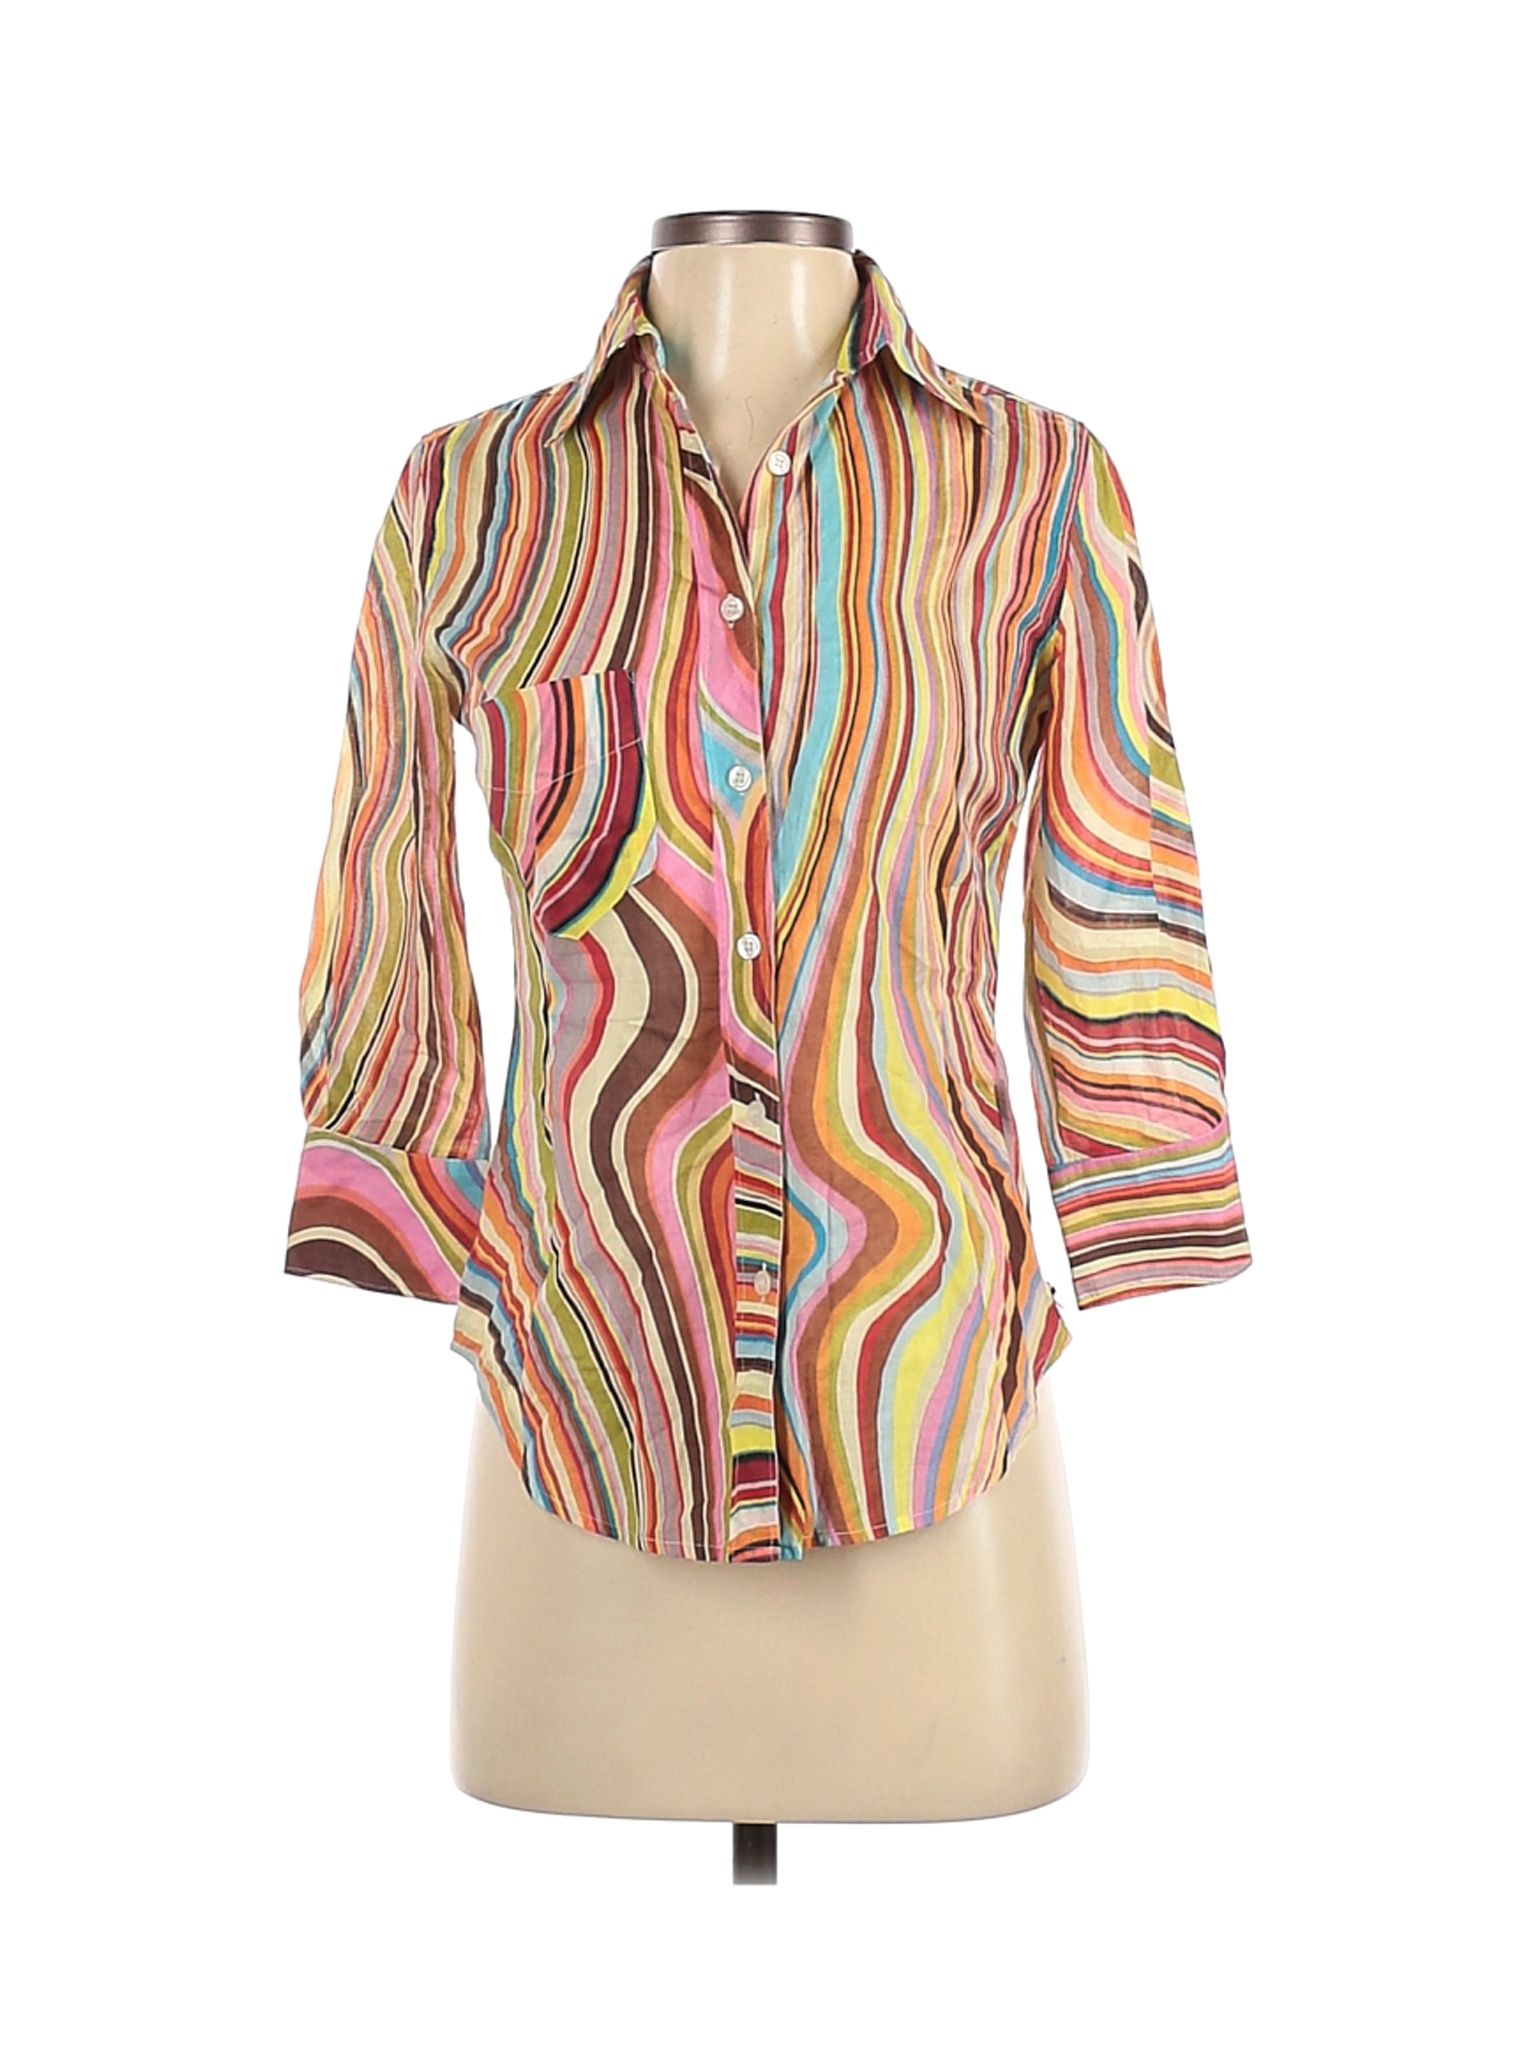 Paul Smith Women Brown Long Sleeve Button-Down Shirt 38 eur | eBay